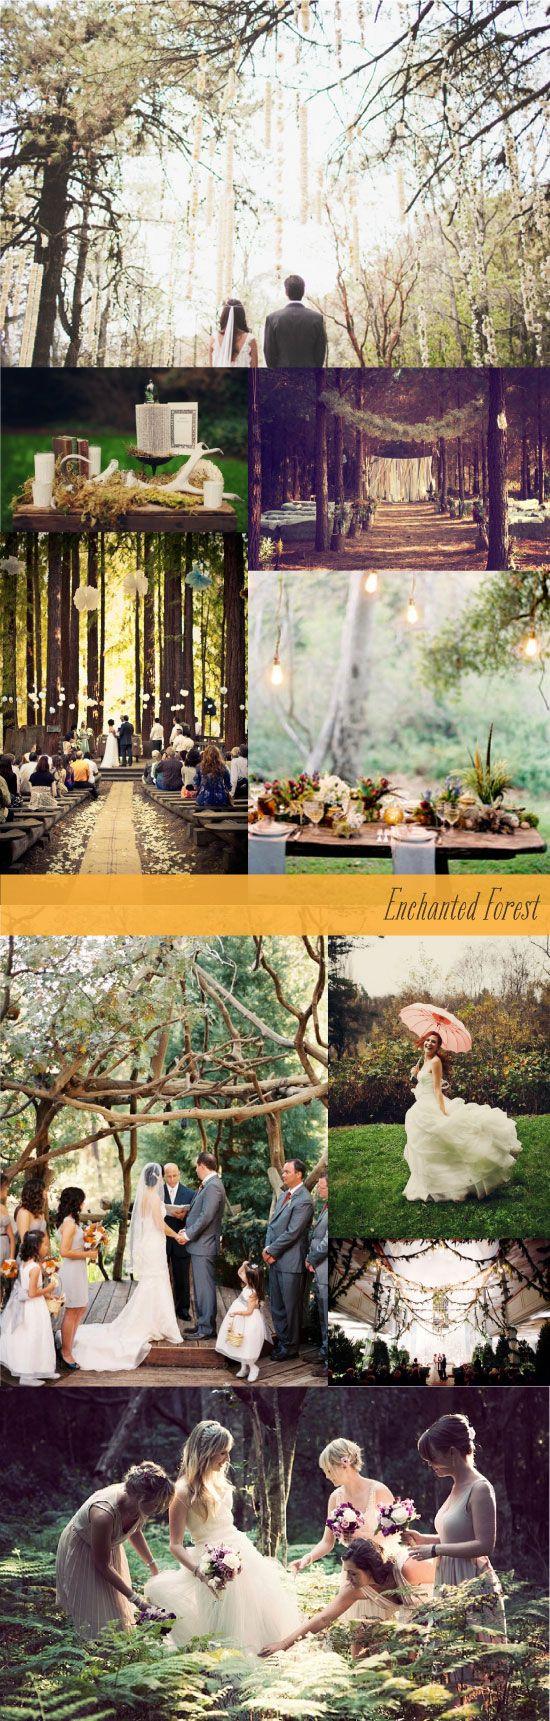 Wedding - Enchanted Rustic Forest Wedding Inspiration Board